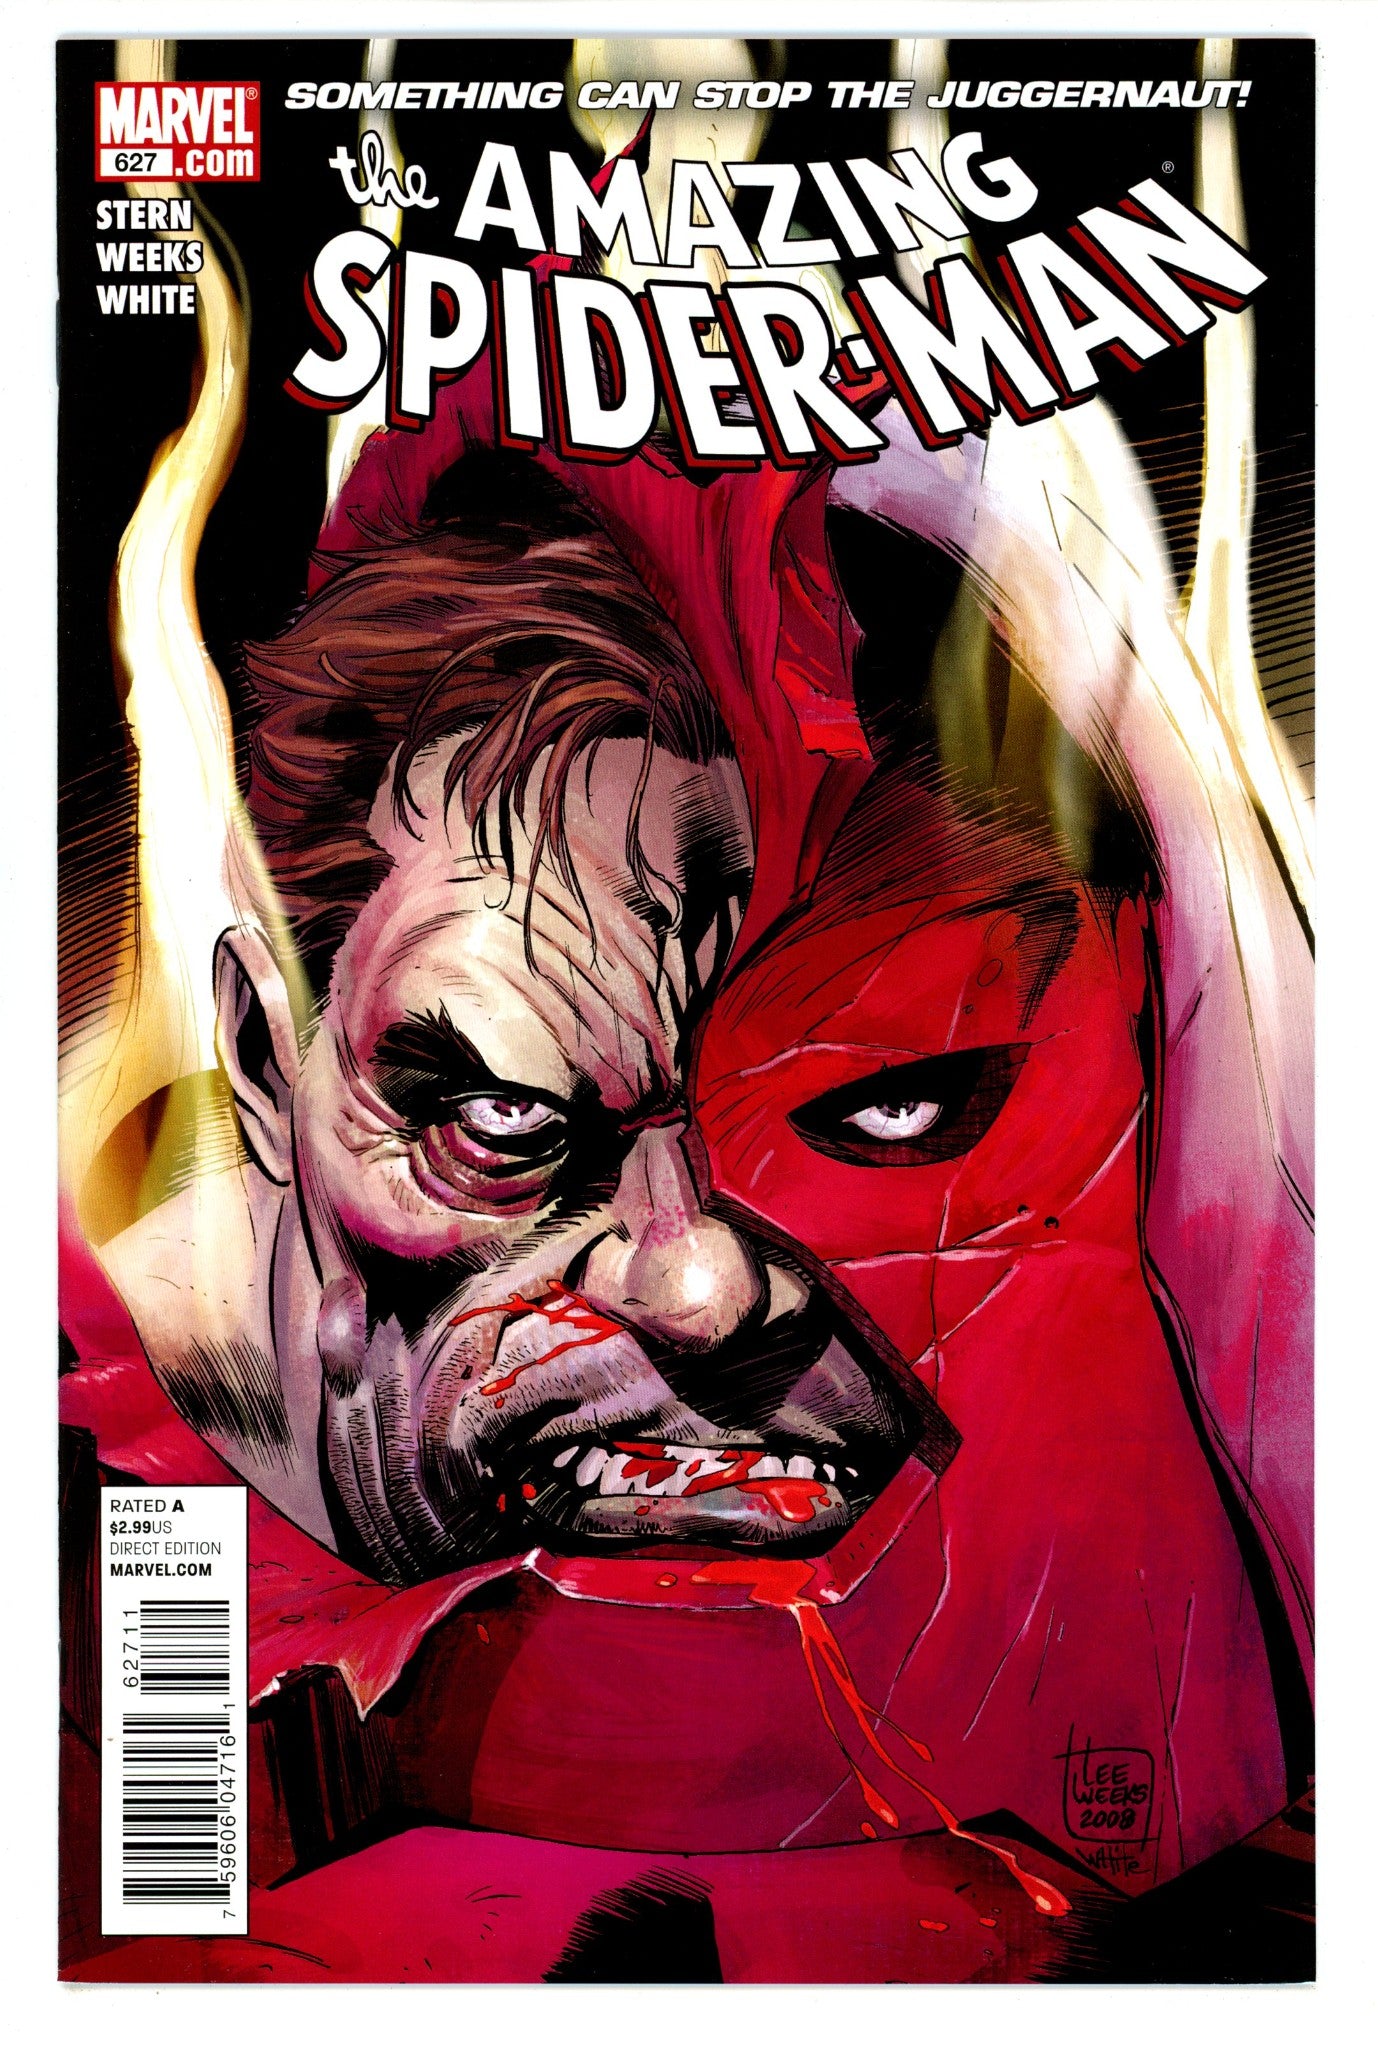 The Amazing Spider-Man Vol 2 627 NM- (9.2) (2010) 